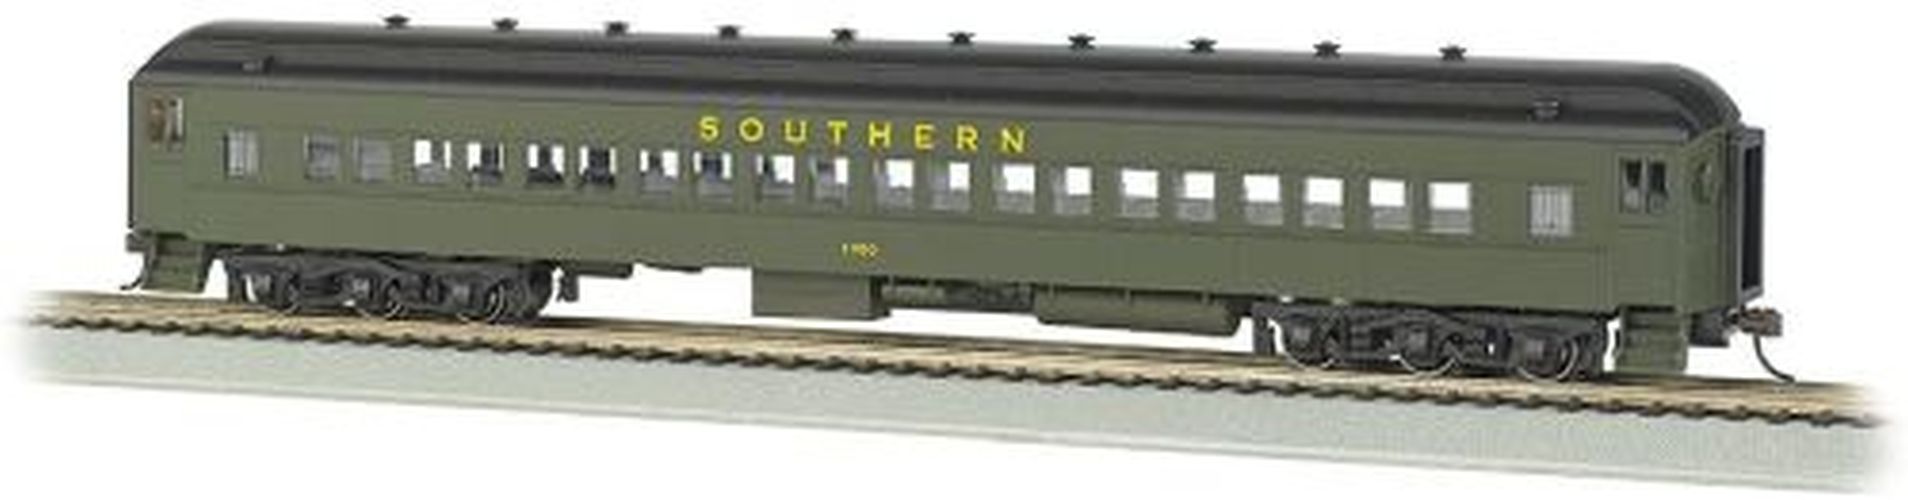 BACHMANN Southern Pacific 72 Heavywight Coach Car Ho Scale - 